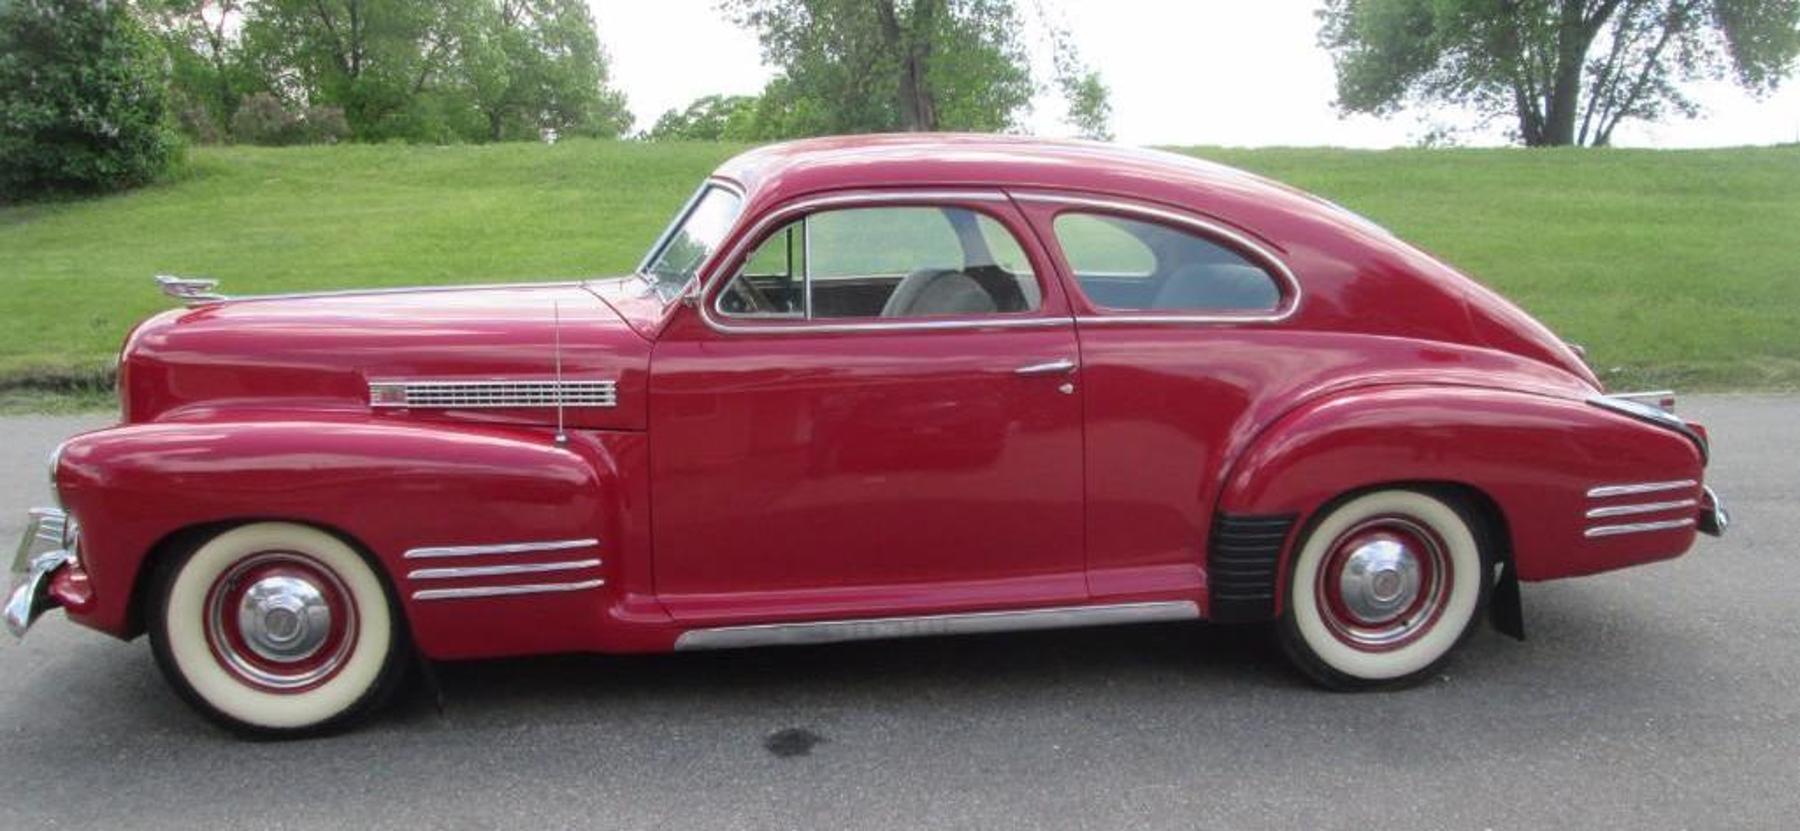 1941 Cadillac Car